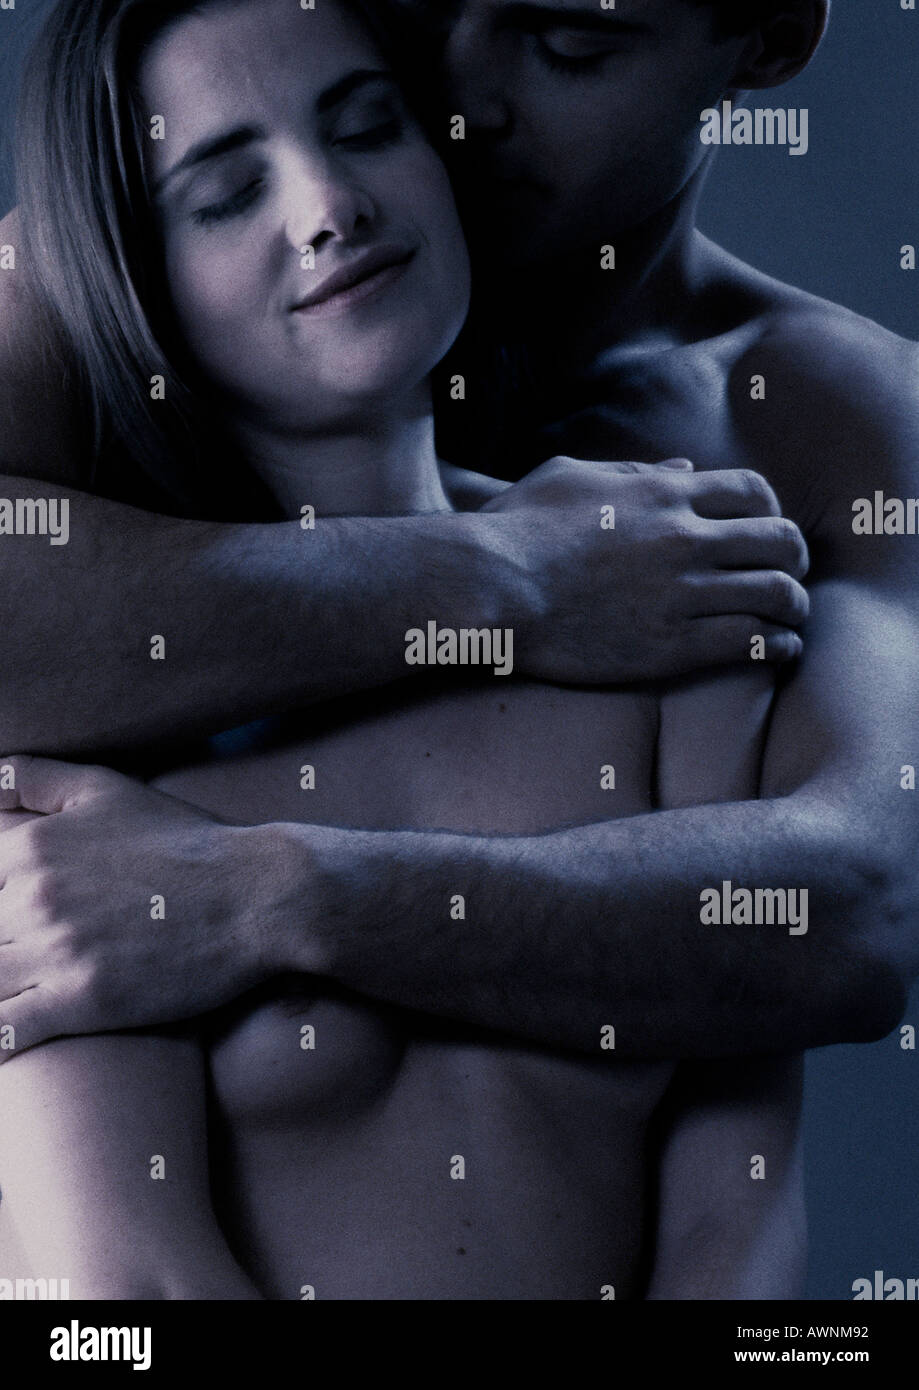 Hombre desnudo abrazando mujer desnuda de espaldas, close-up Fotografía de stock